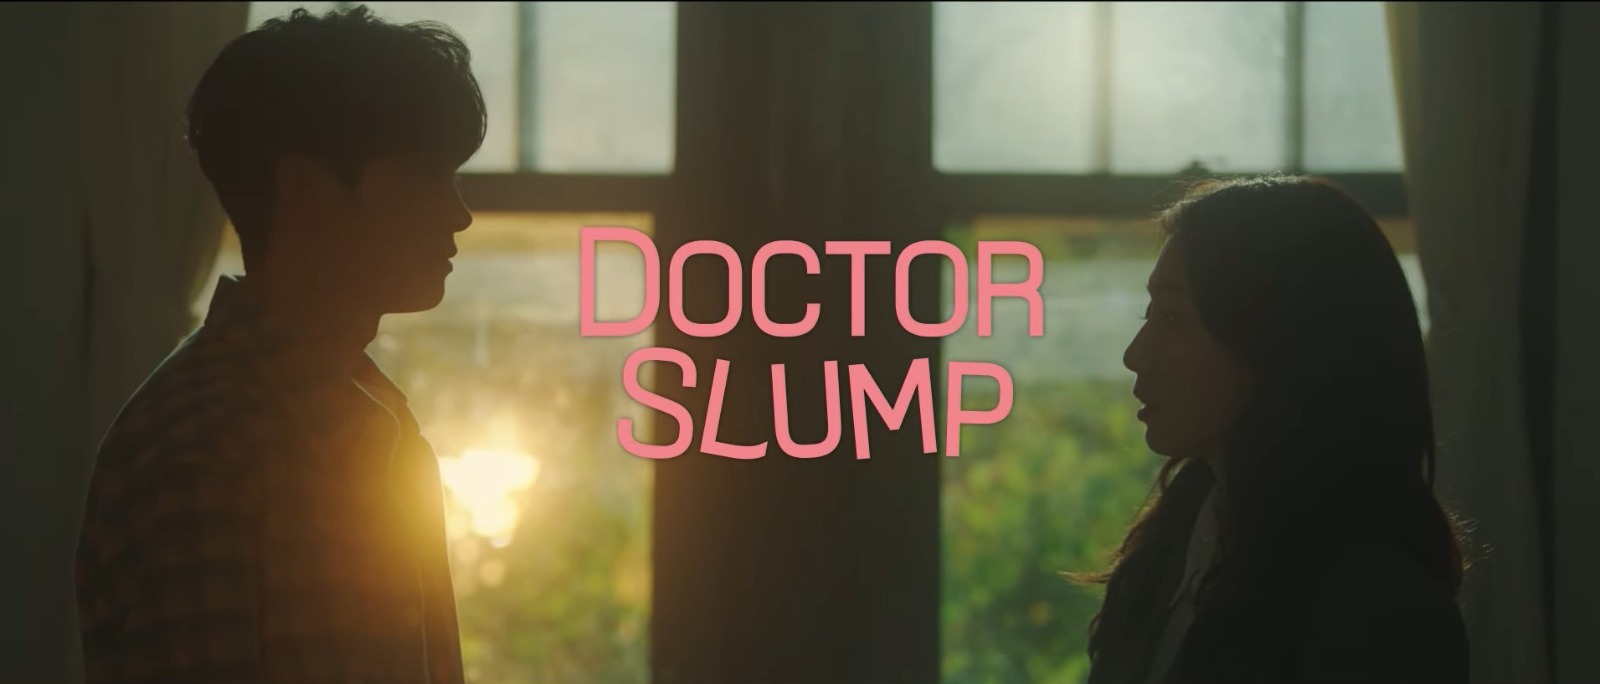 Drama Korea 'Doctor Slump' Bersiap Rilis di Netflix dengan Chemistry Park Hyung Sik dan Park Shin Hye!